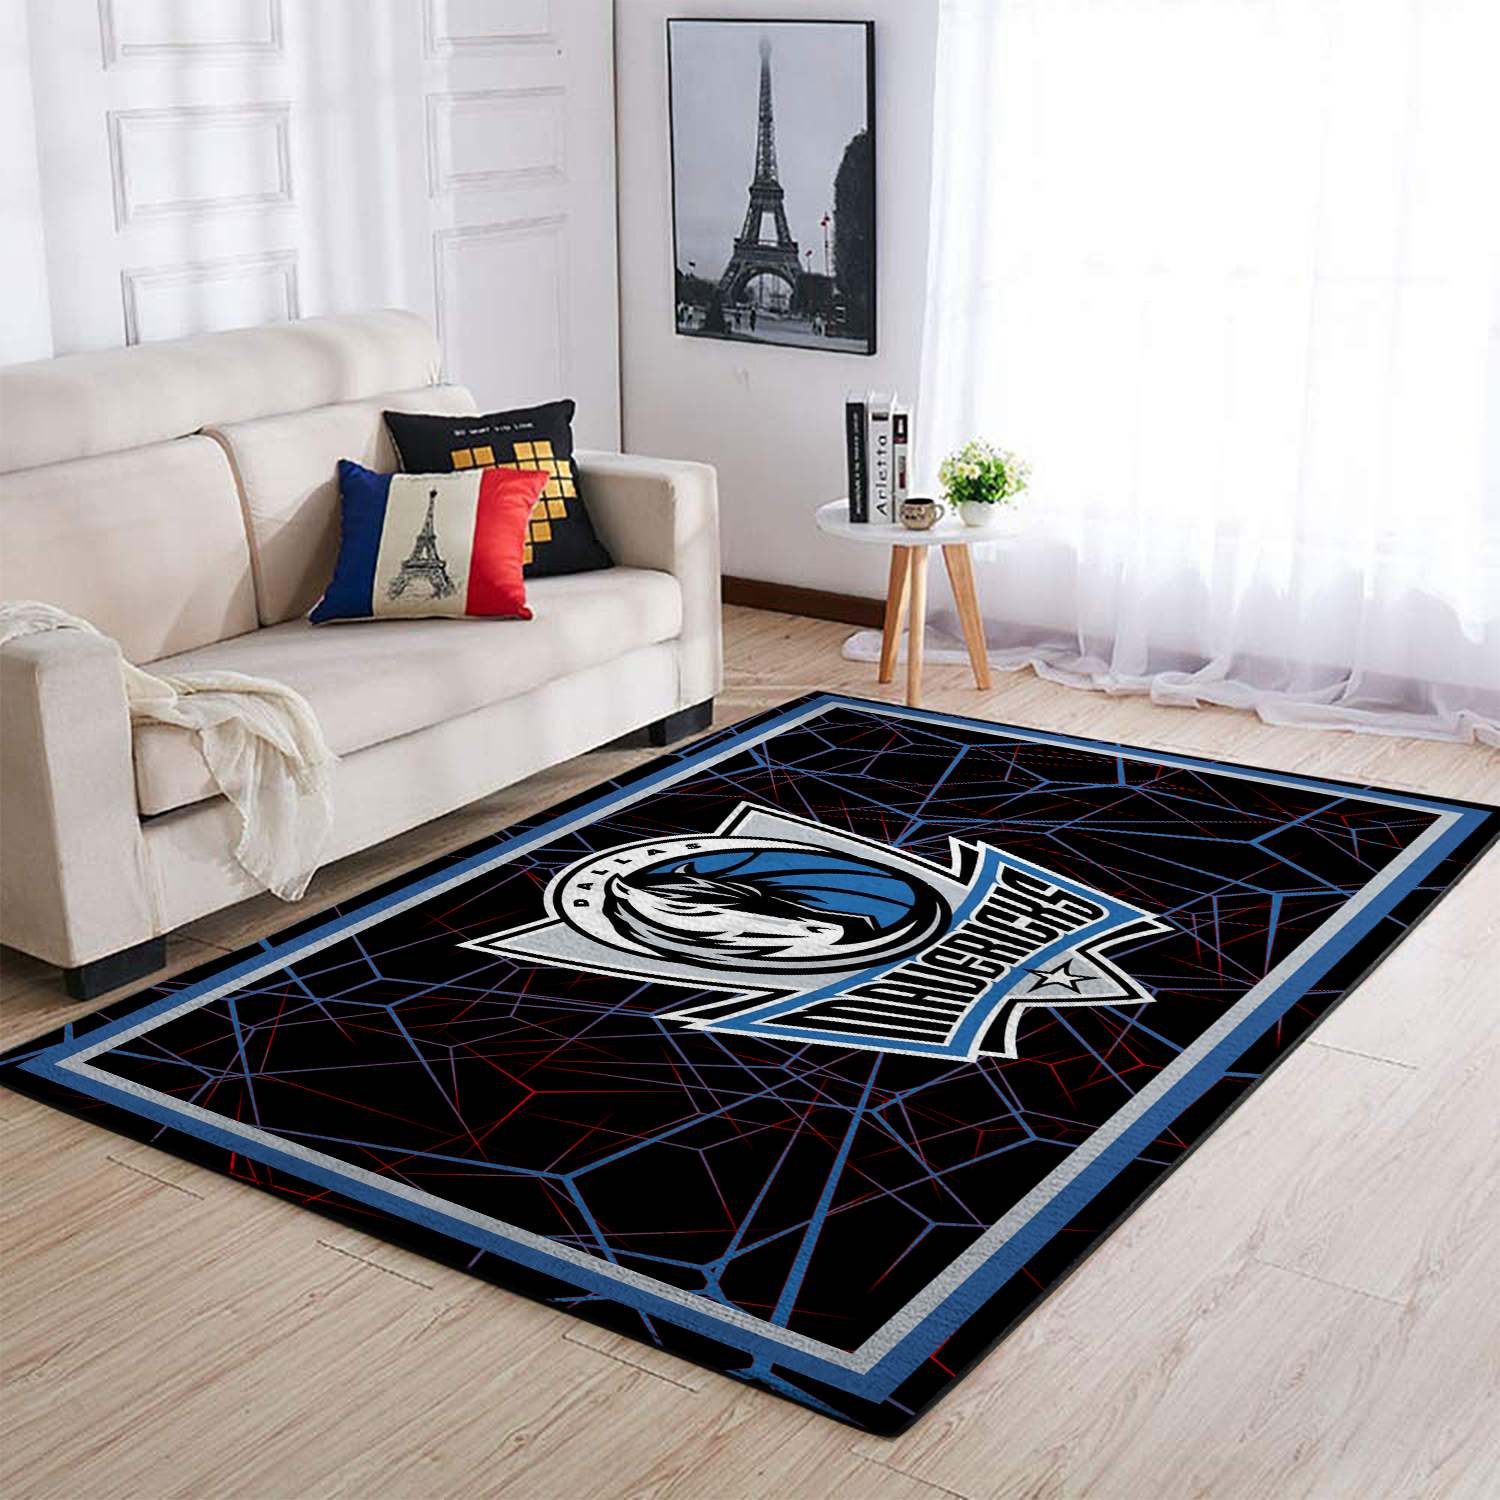 Dallas Mavericks Area Rugs Living Room Carpet SIC191206 Basketball Rugs Local Brands Floor Decor